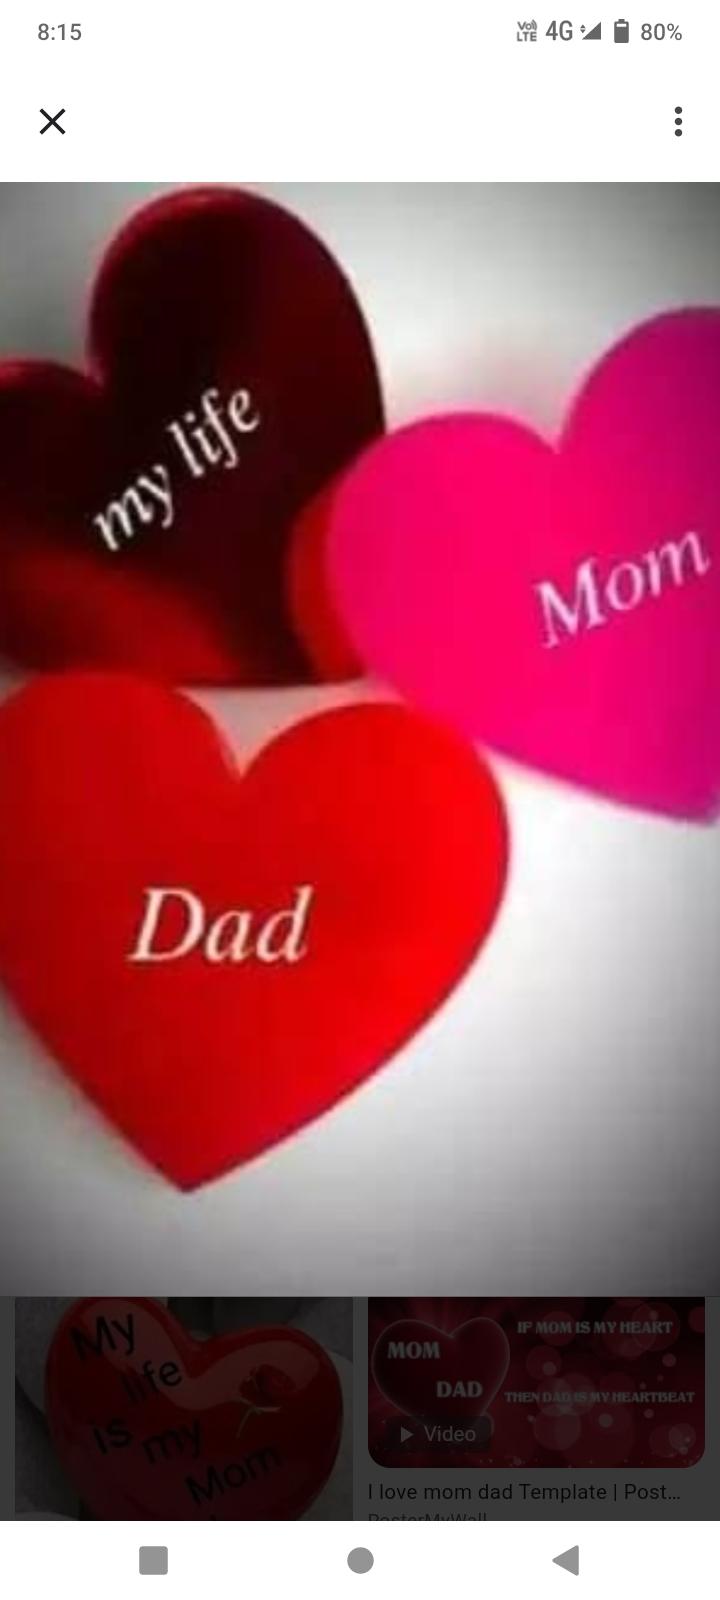 l love my family mom papa aapi bhaeðŸ˜˜ðŸ˜˜ðŸ˜˜ðŸ˜˜ðŸ˜˜ðŸ˜˜ðŸ˜˜ Images â€¢ ðŸŽ¸CG lover ðŸŽ¸  (@2663802253) on ShareChat